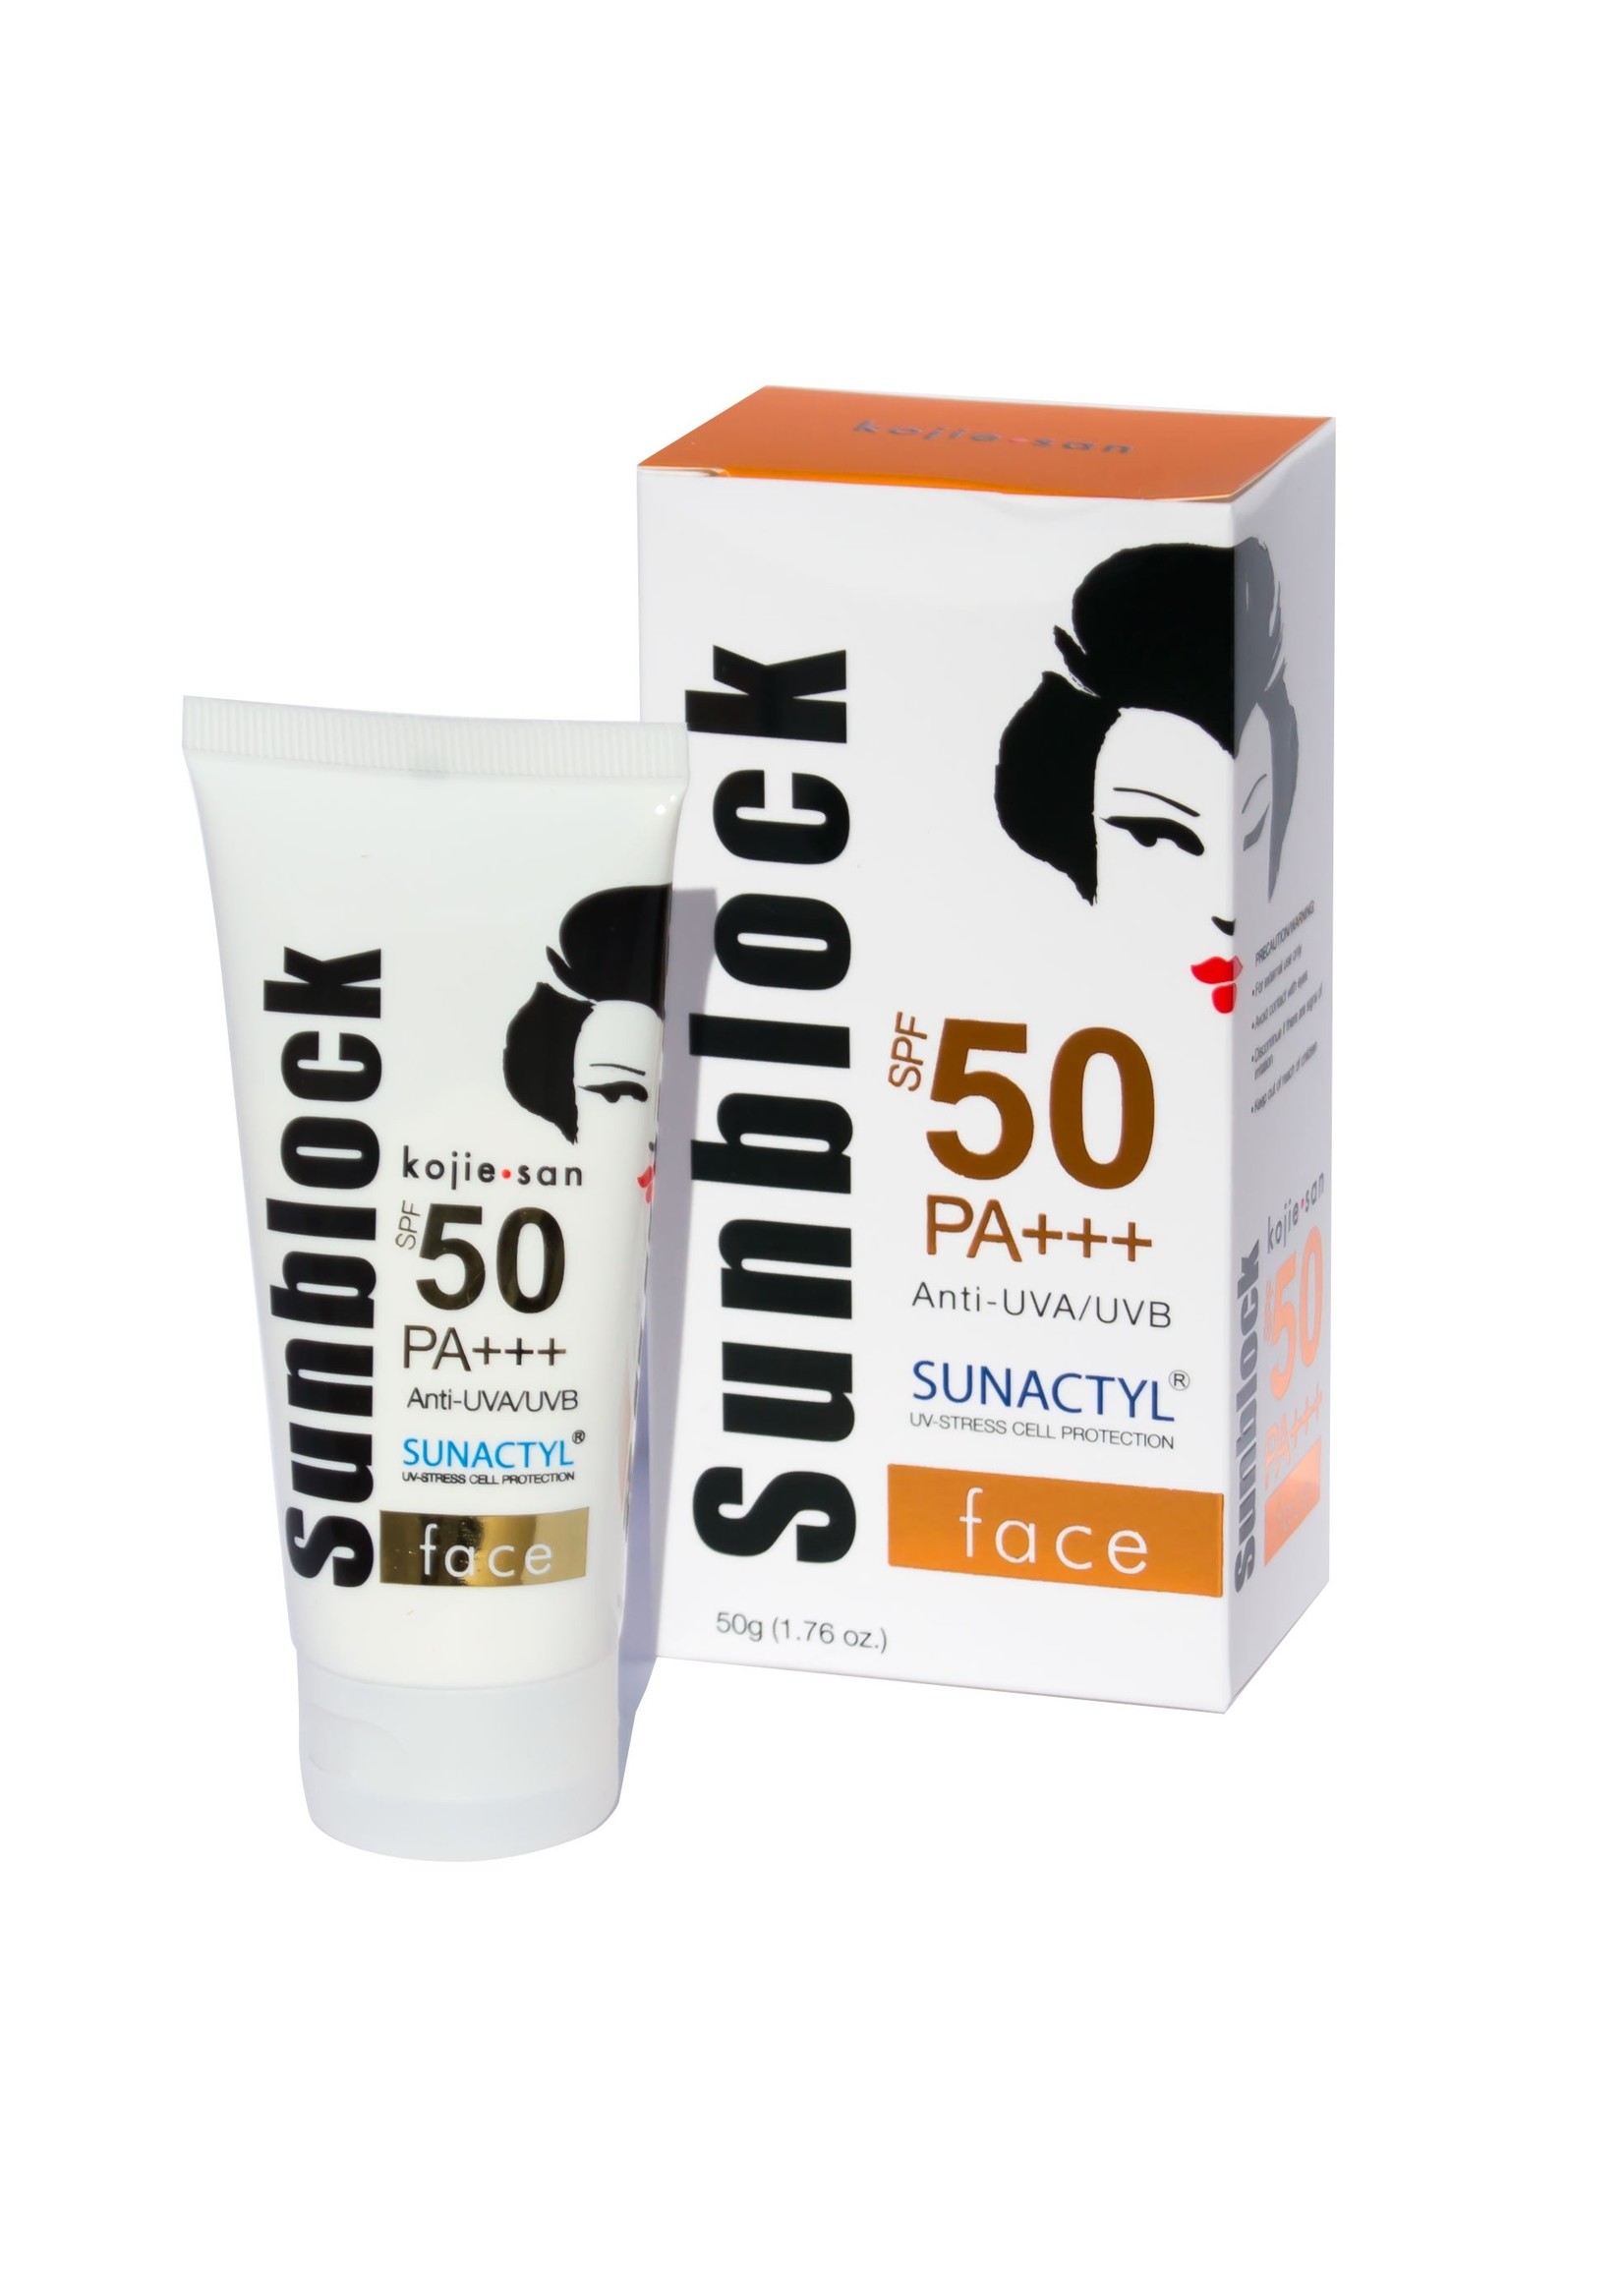 Kojie San Face Sunblock SPF 50 PA+++ 50 grammes